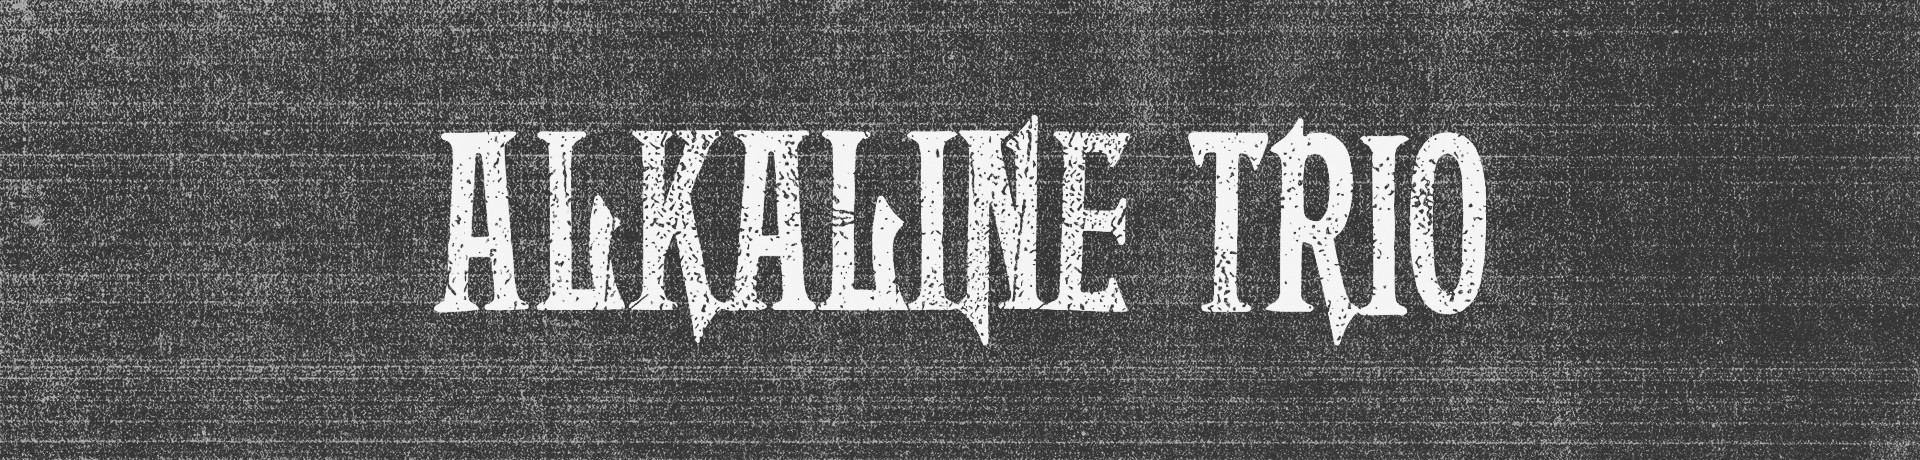 Alkaline Trio - Flowers Down